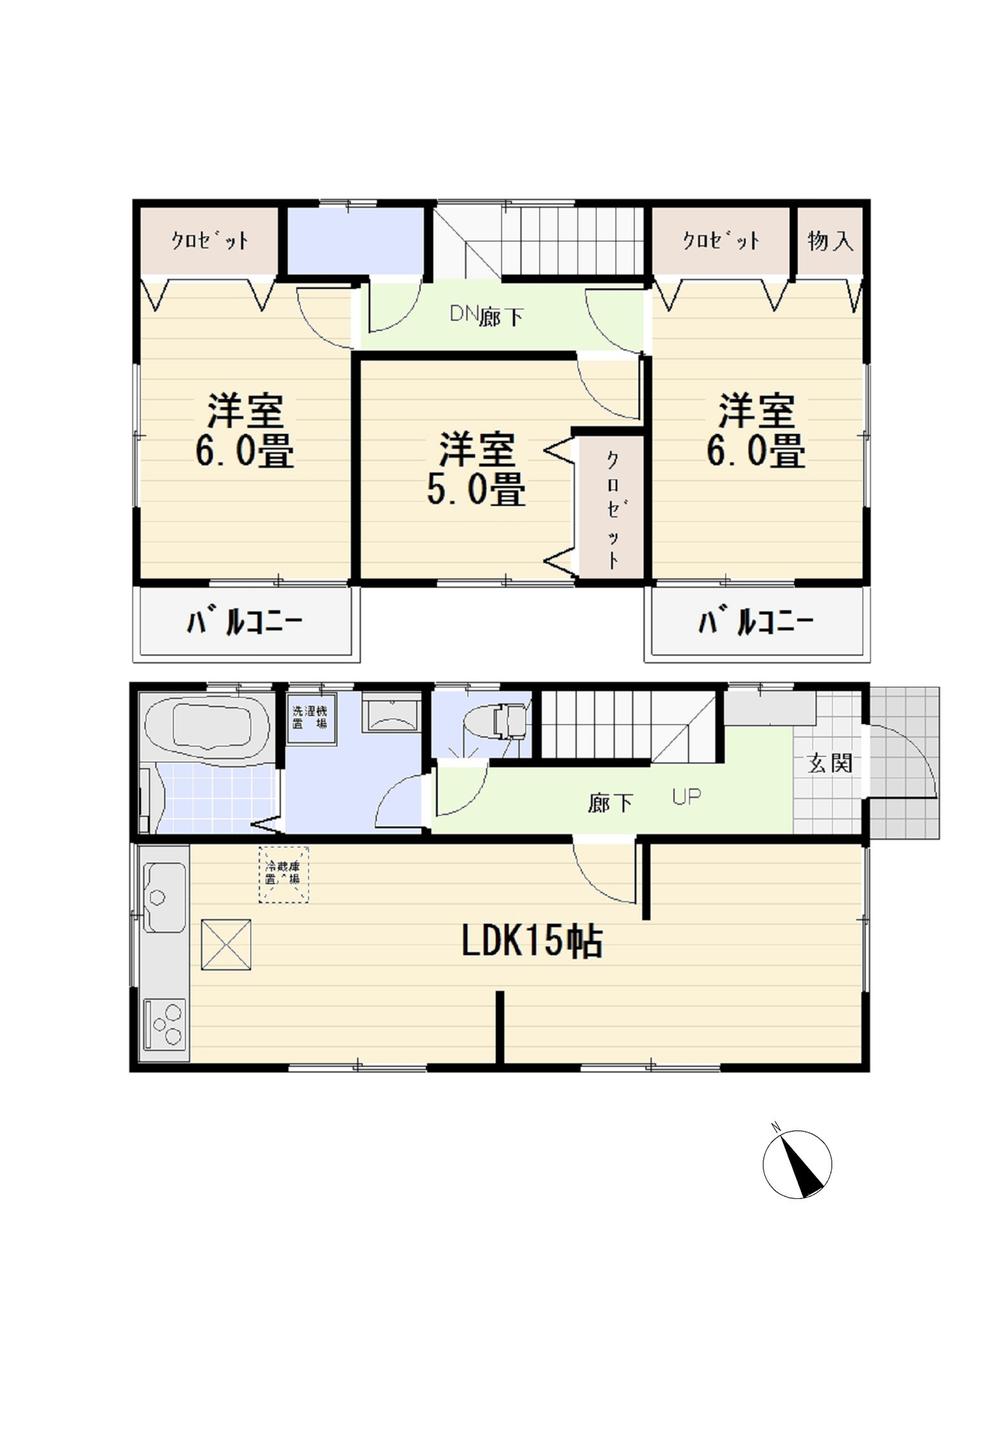 Floor plan. (1 Building), Price 39,800,000 yen, 3LDK, Land area 96.54 sq m , Building area 82.8 sq m